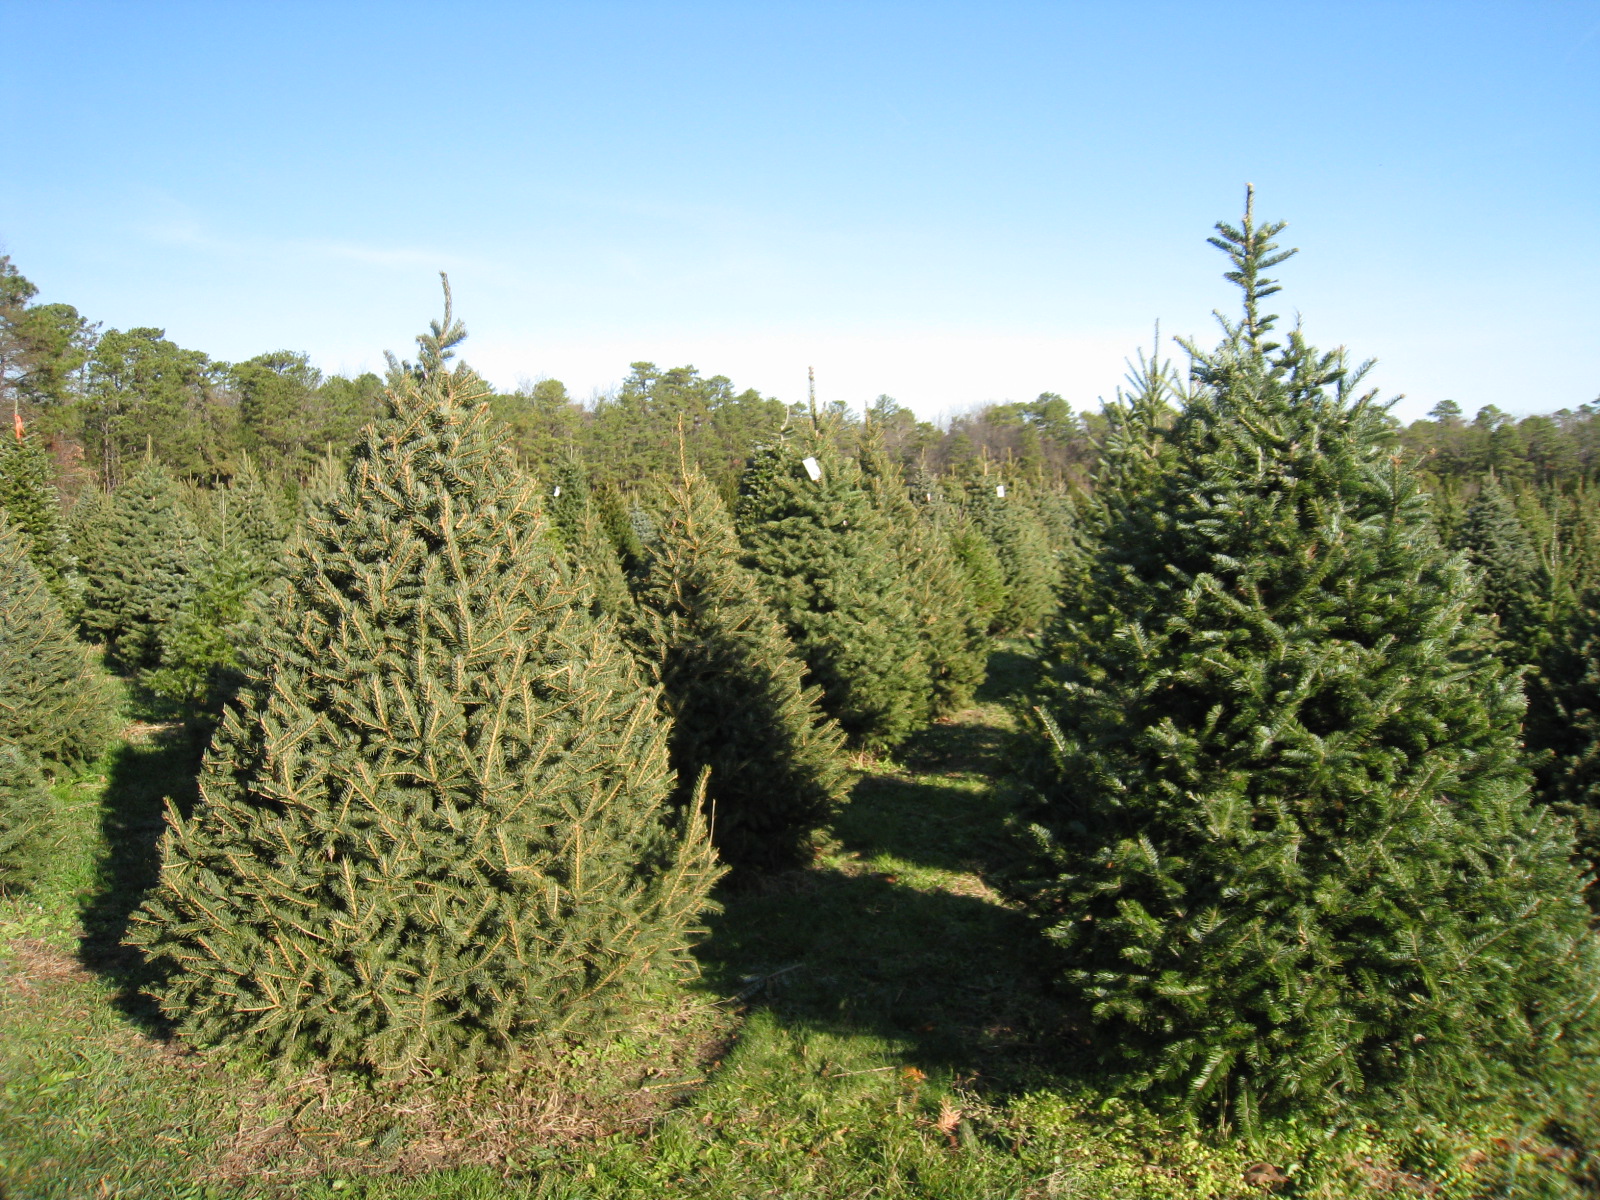 Best Christmas Tree Cutting Experiences Near Detroit – CBS Detroit